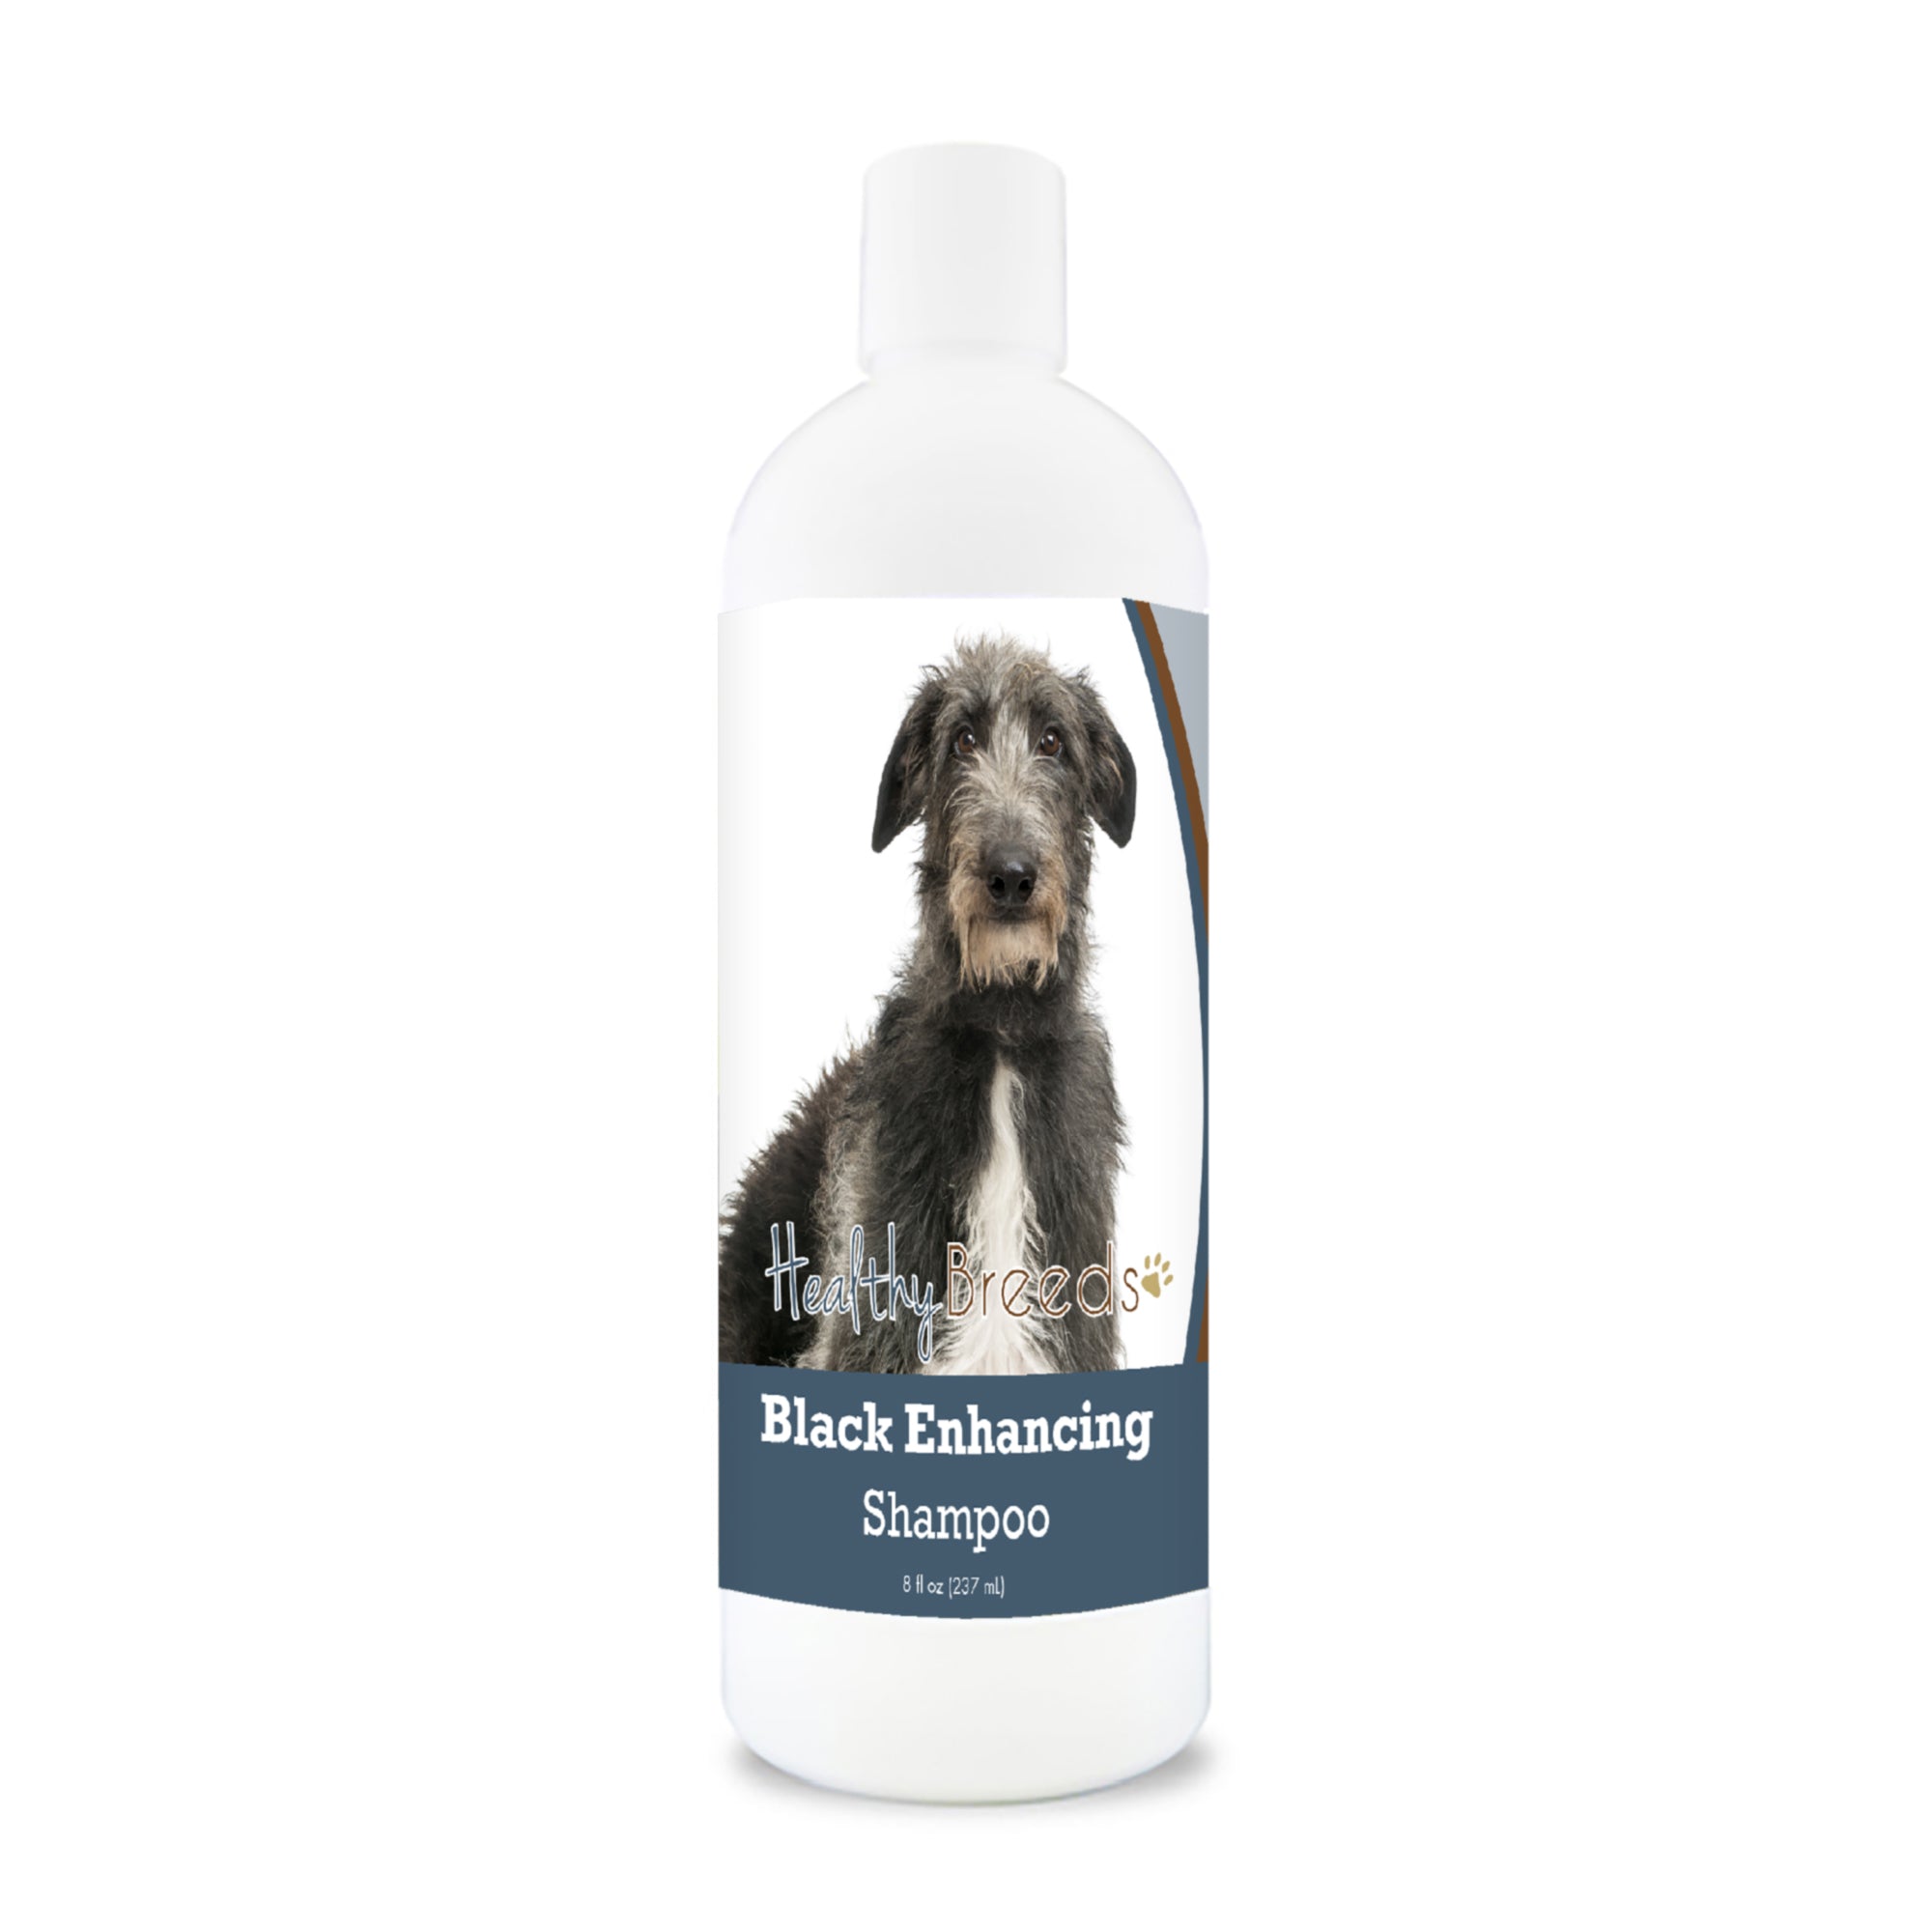 Scottish Deerhound Black Enhancing Shampoo 8 oz